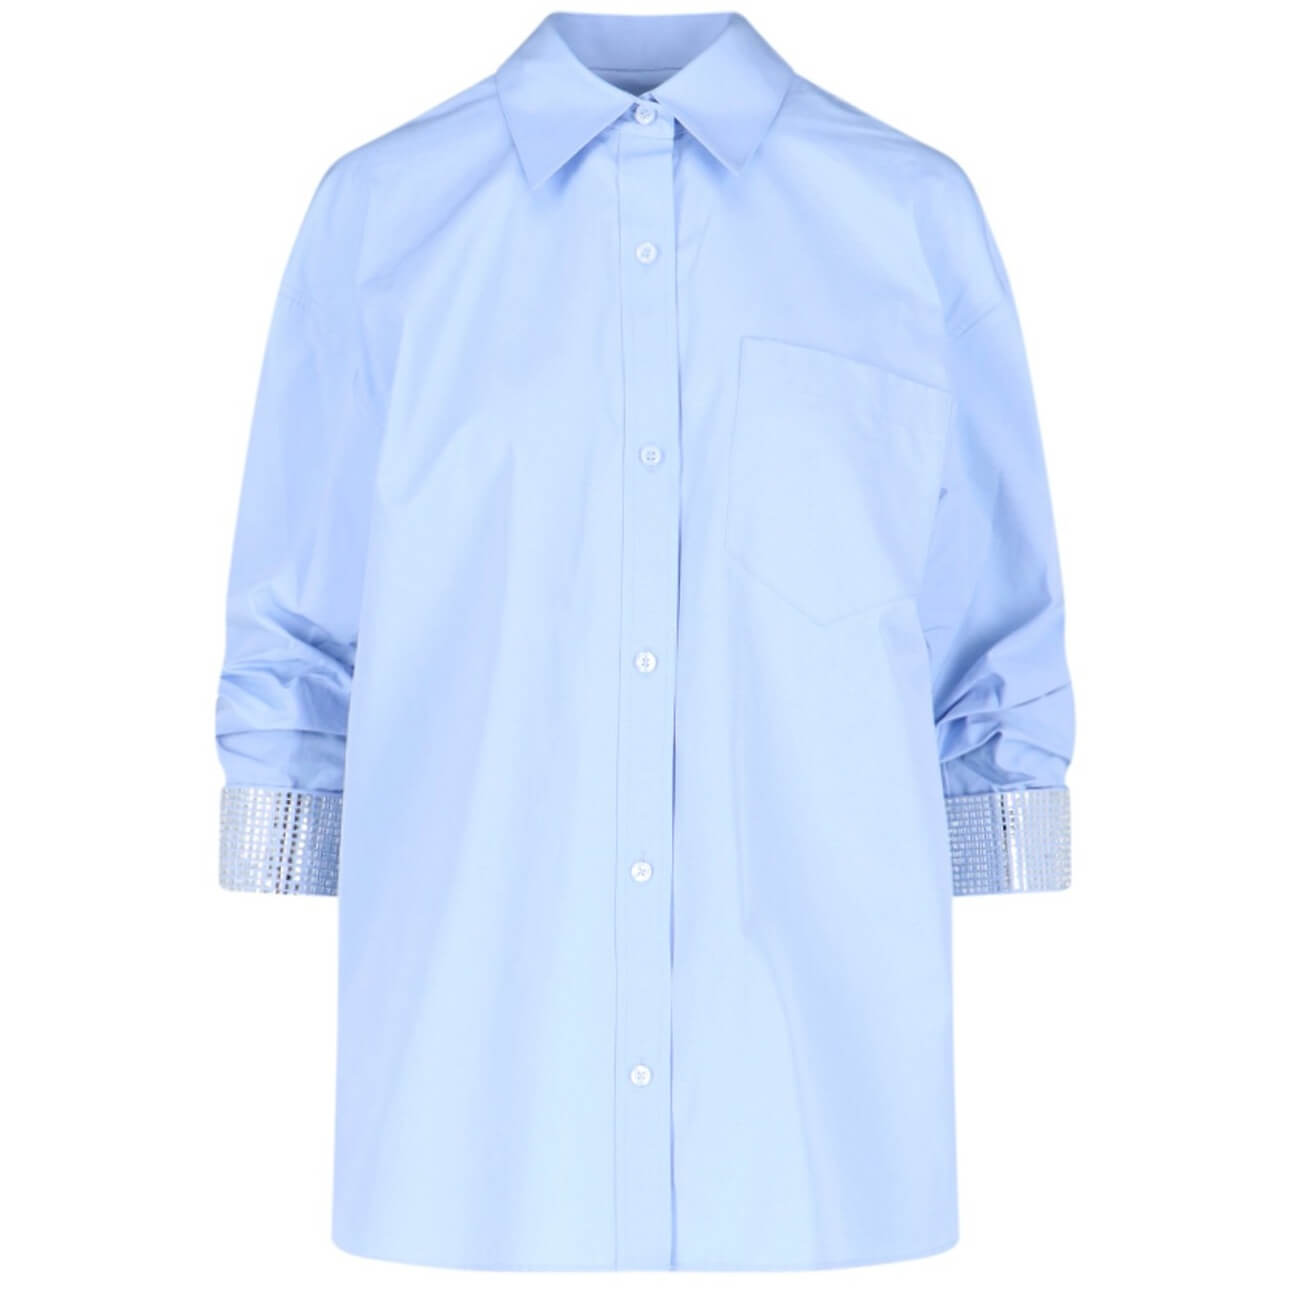 Alexander Wang Crystal-Embellished Cuff Button-Down Shirt